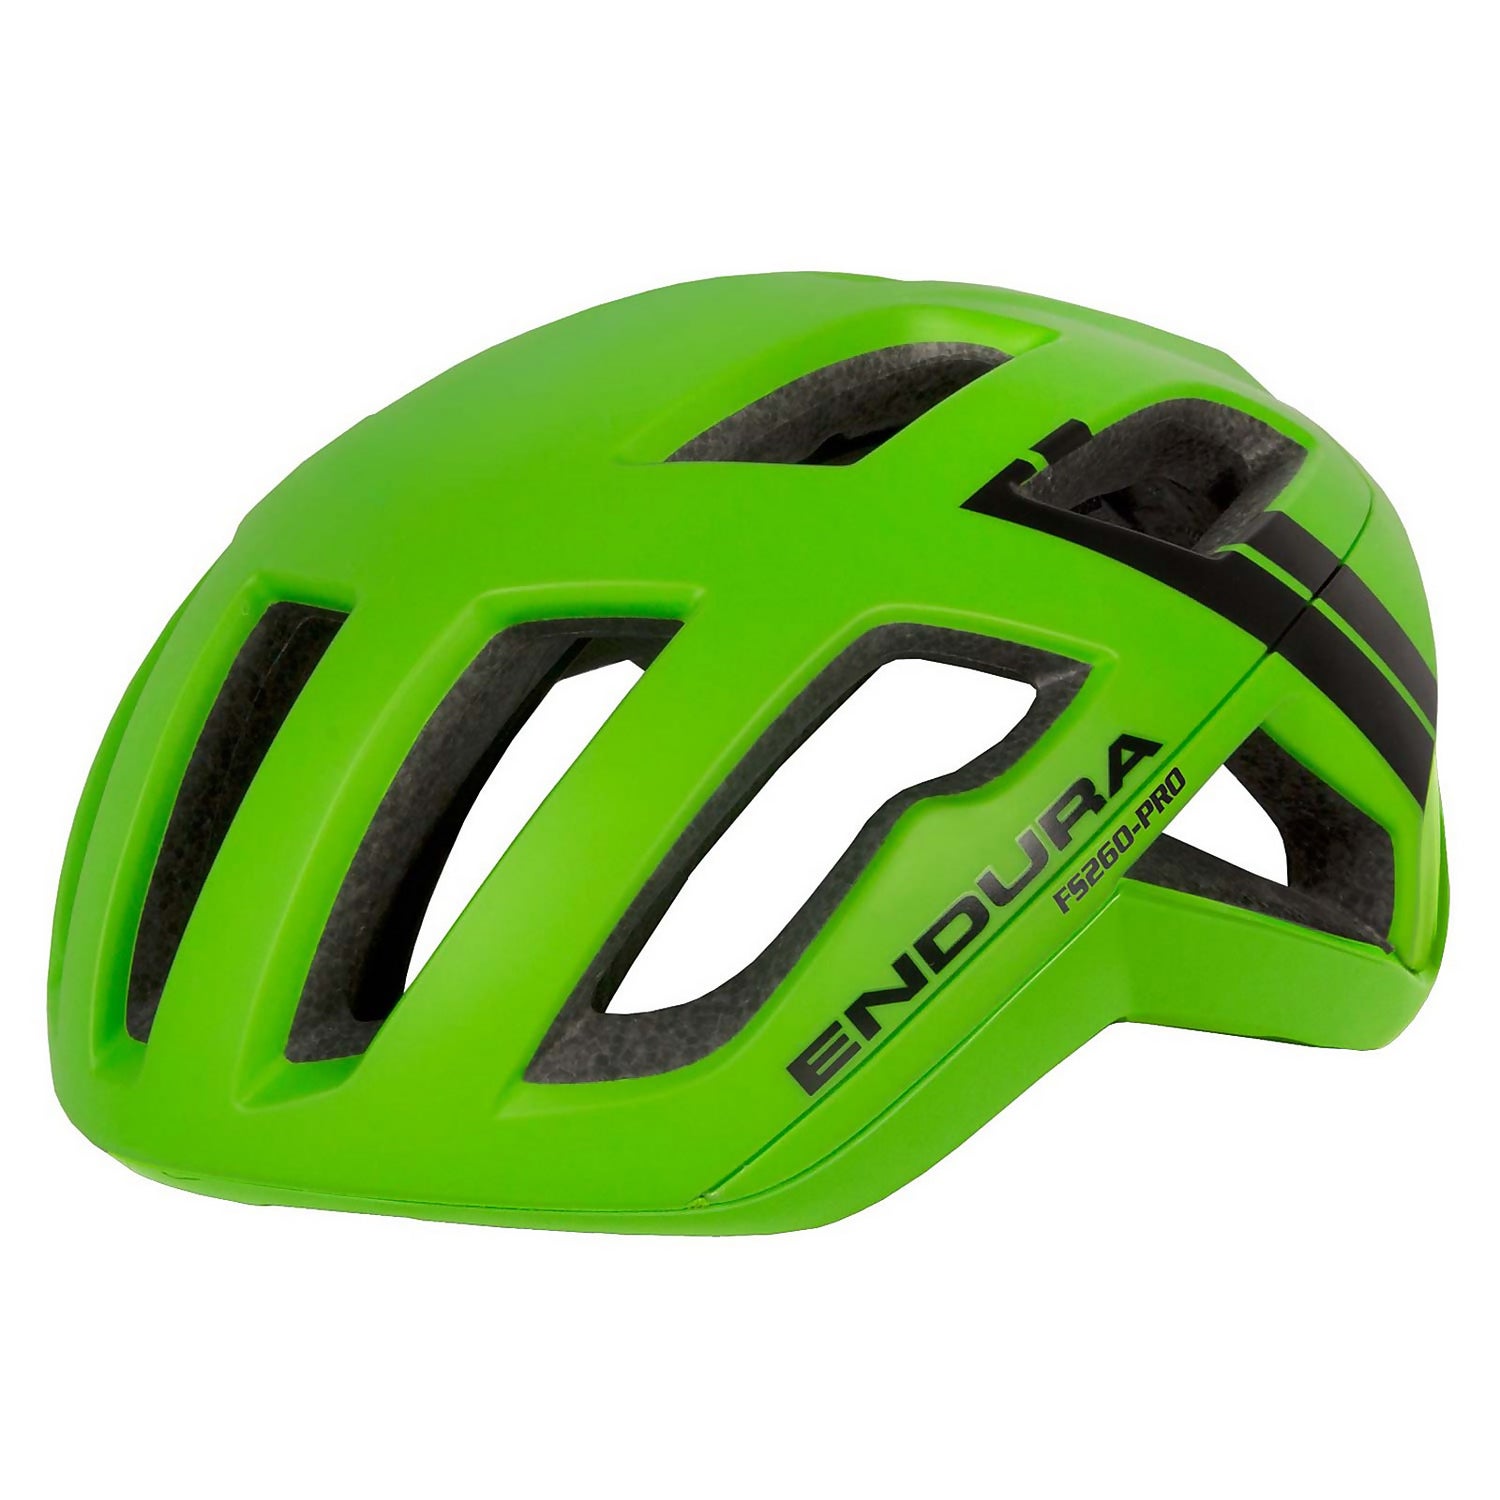 Men's FS260-Pro Helmet - Hi-Viz Green